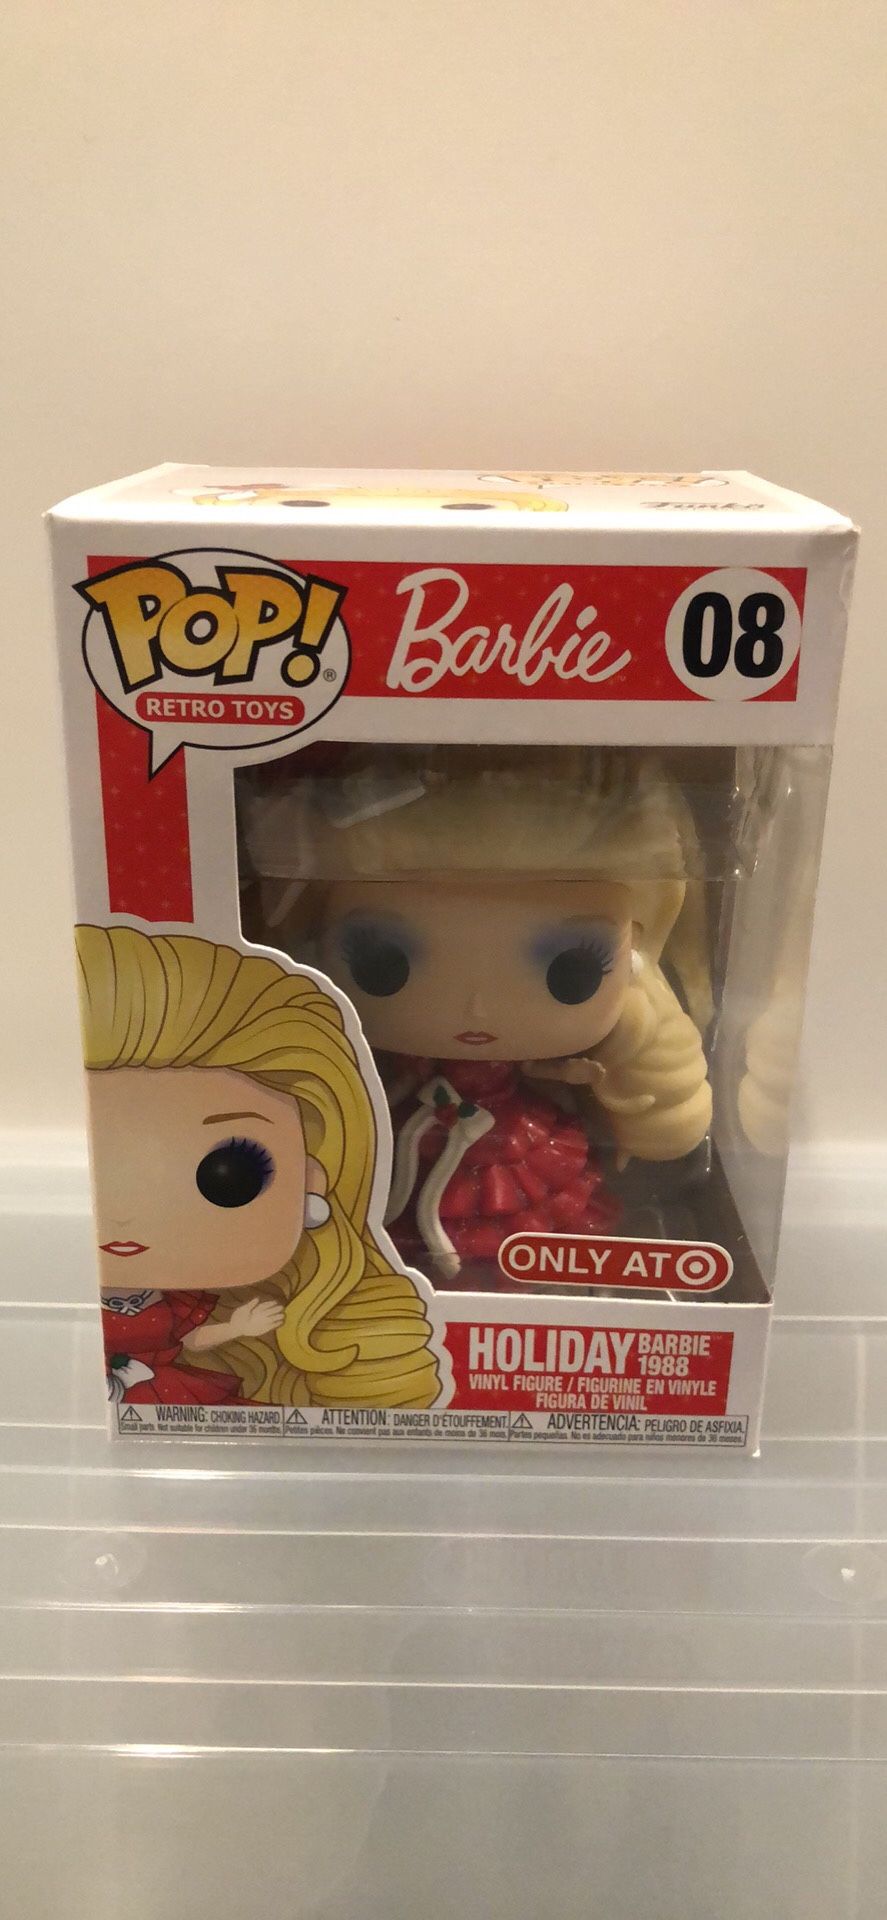 Funko Pop! Holiday Barbie (1988) #08 Target Exclusive